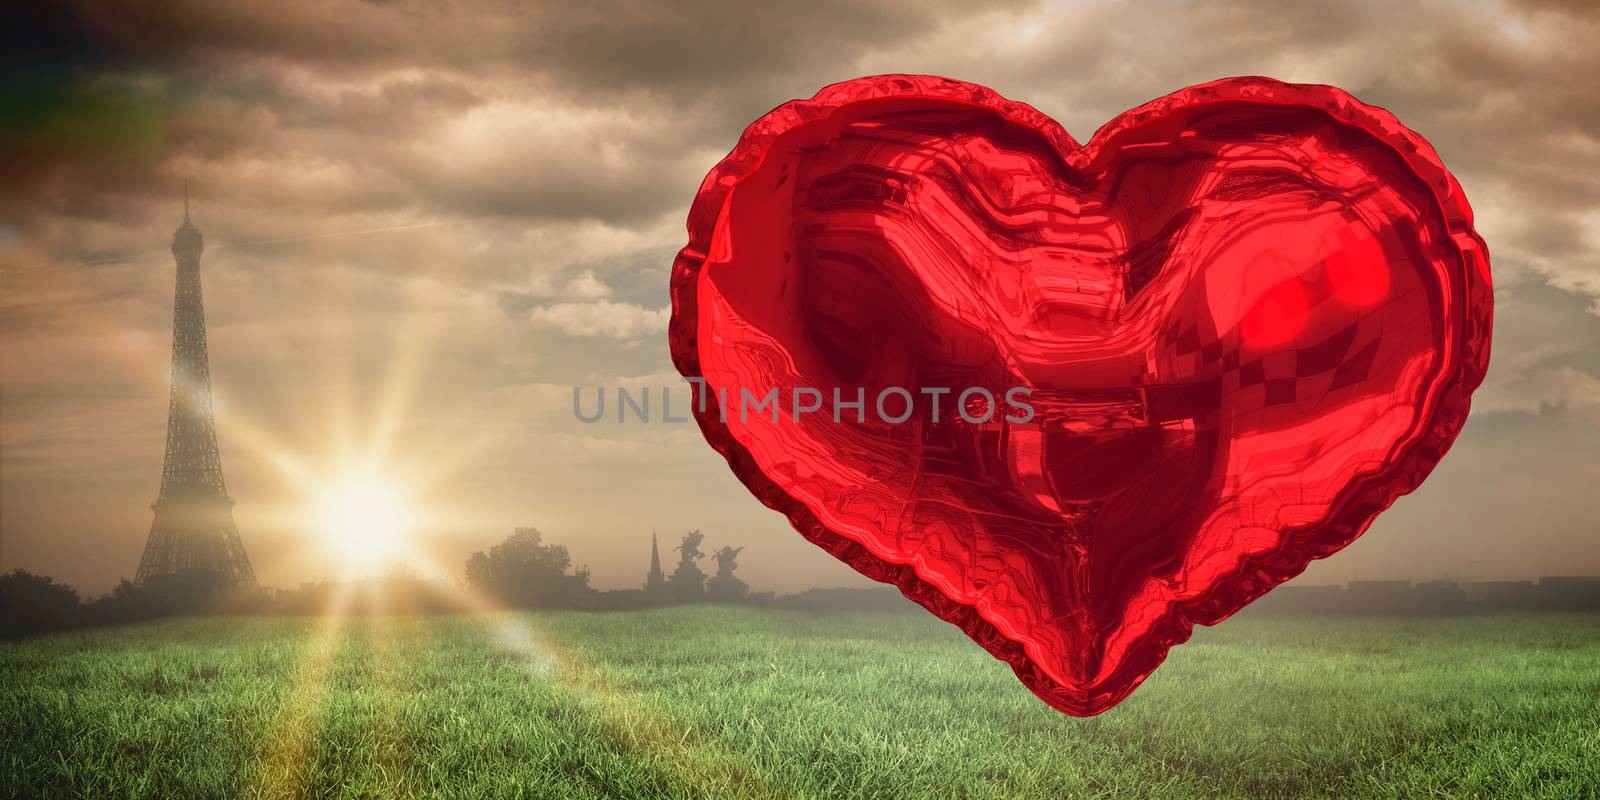 Red heart balloon against paris under cloudy sky